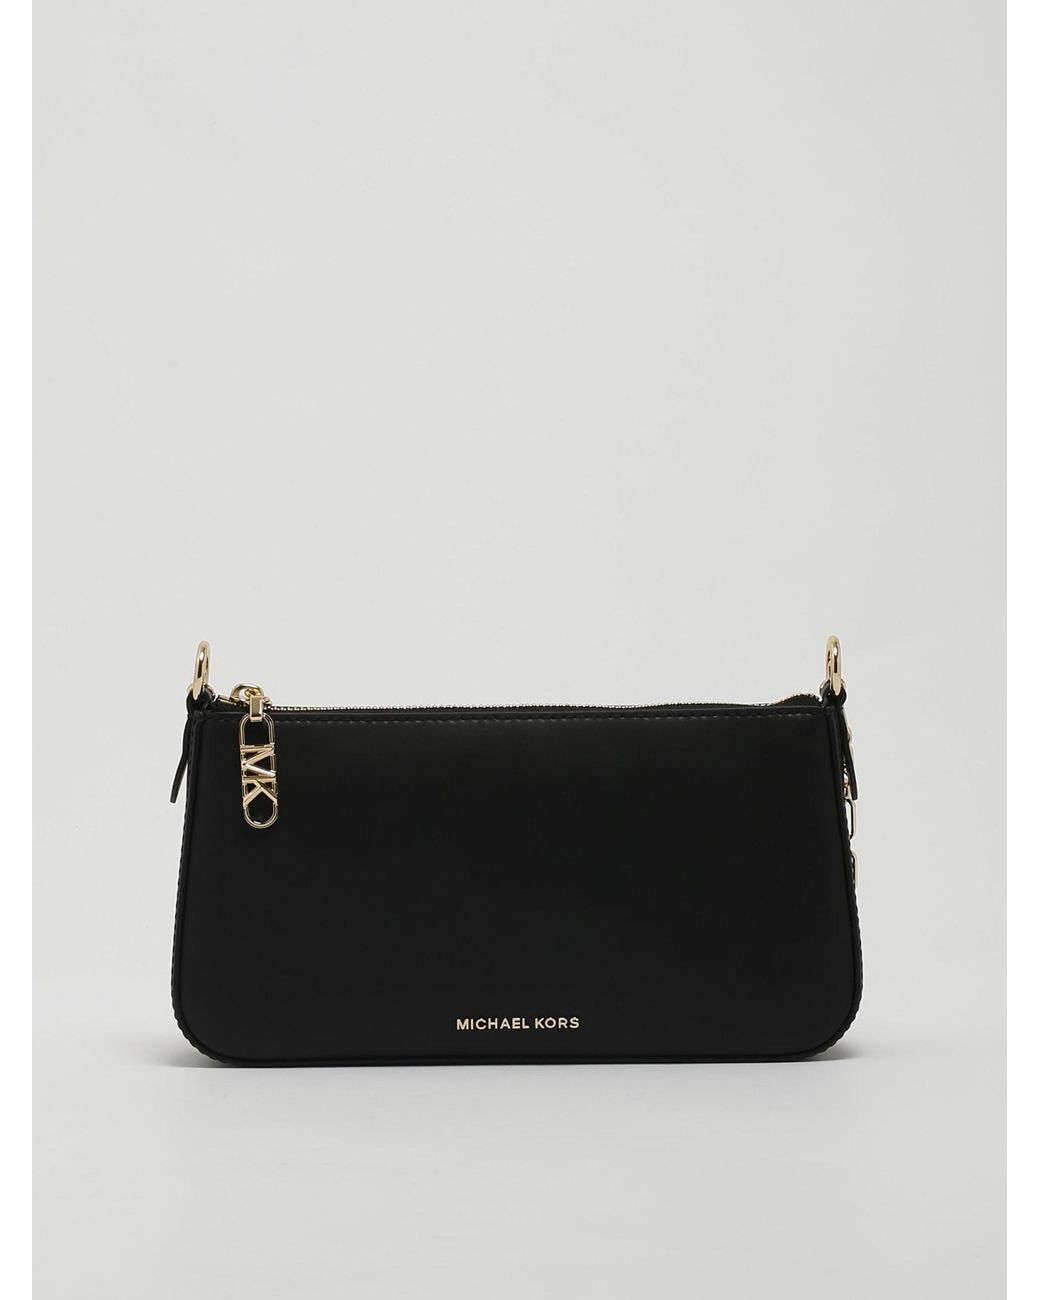 Michael Kors Designer Handbags Sale | semashow.com